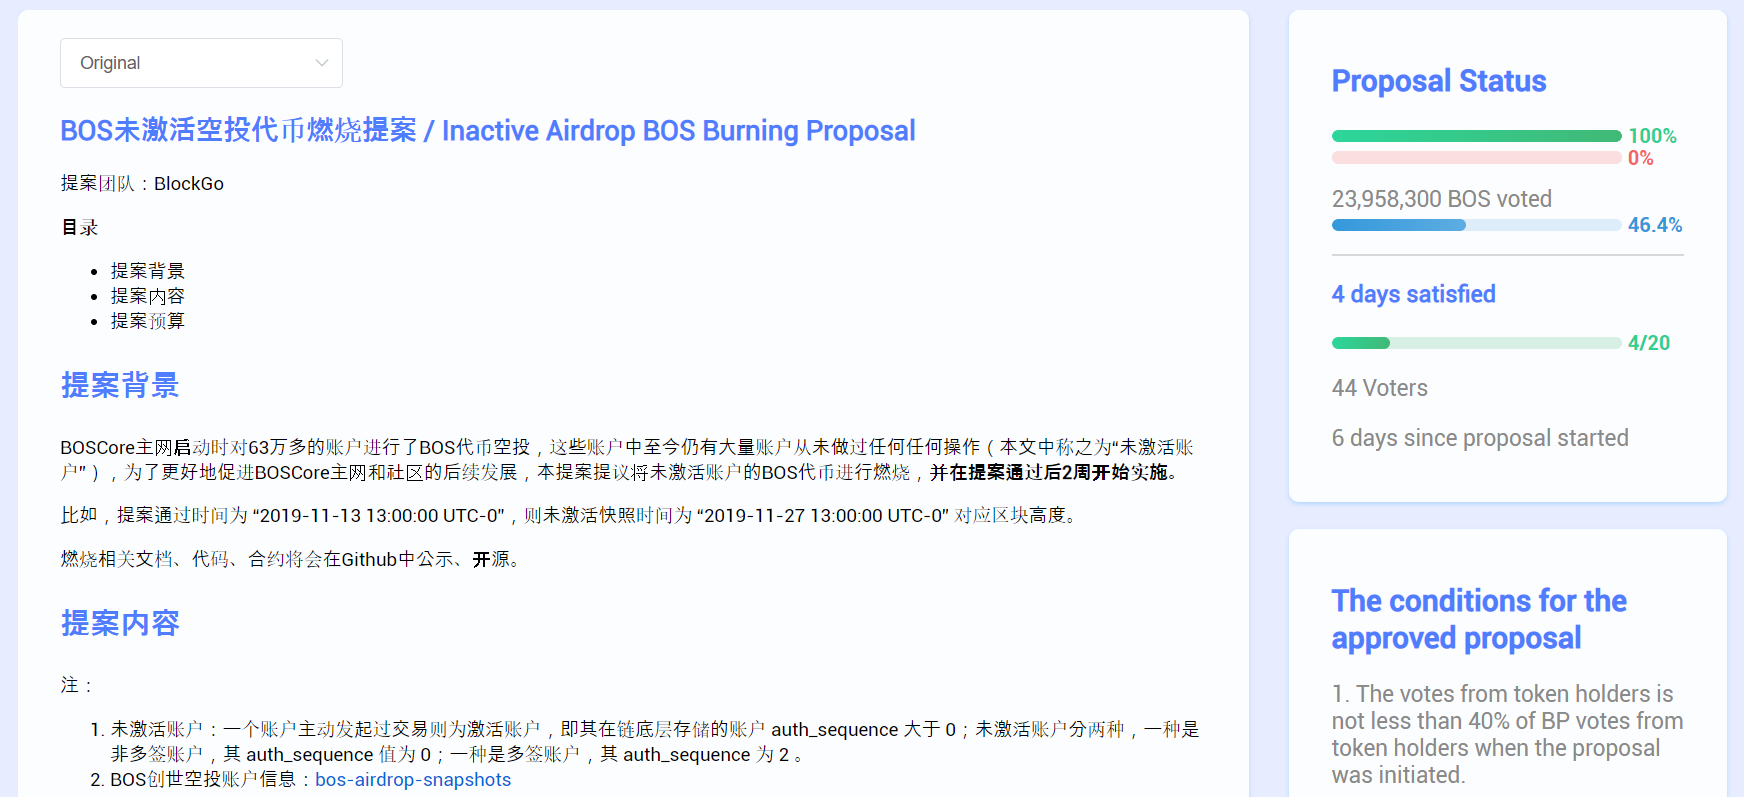 burn proposal.png